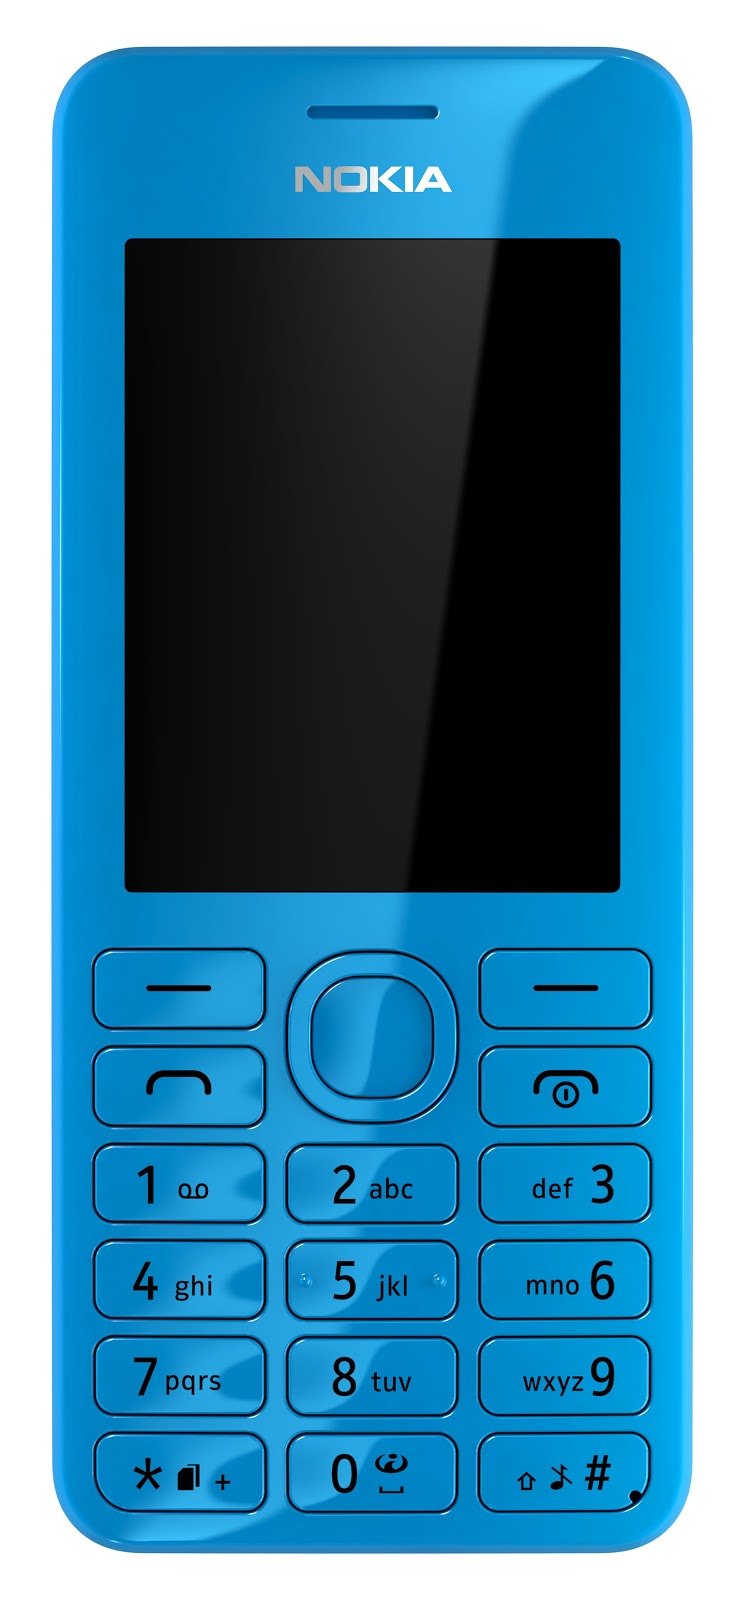 Картинка телефона нокиа. Nokia 206 Dual SIM. Nokia Asha 206. Нокиа кнопочный 206. Нокиа кнопочный синий 1100.